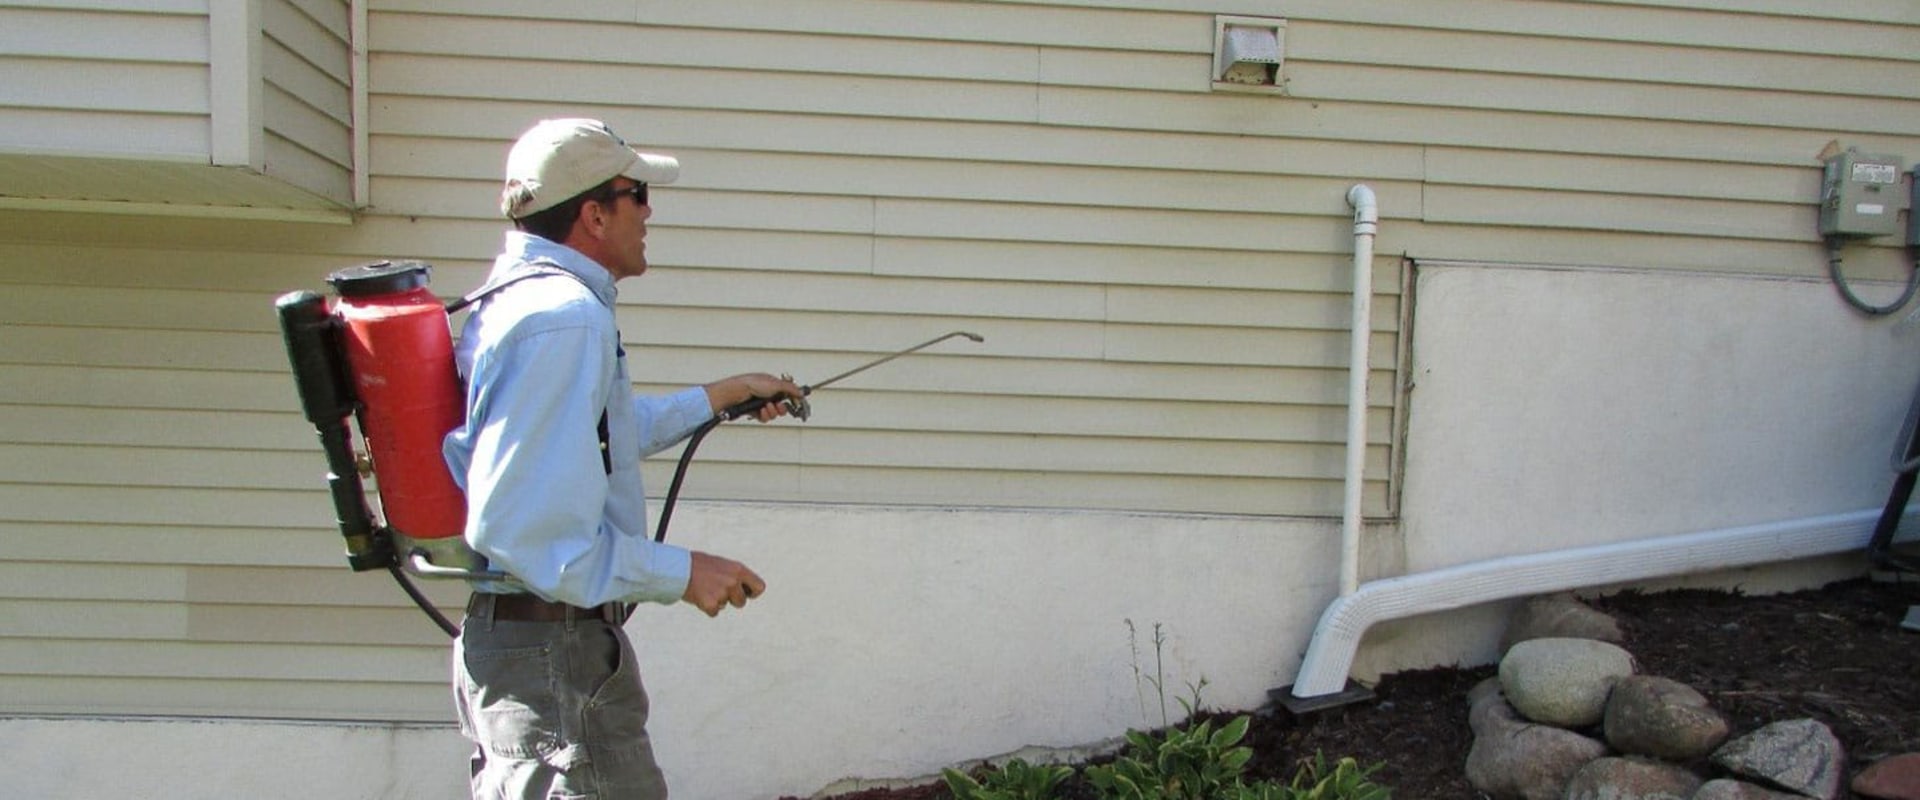 Is exterior pest control effective?